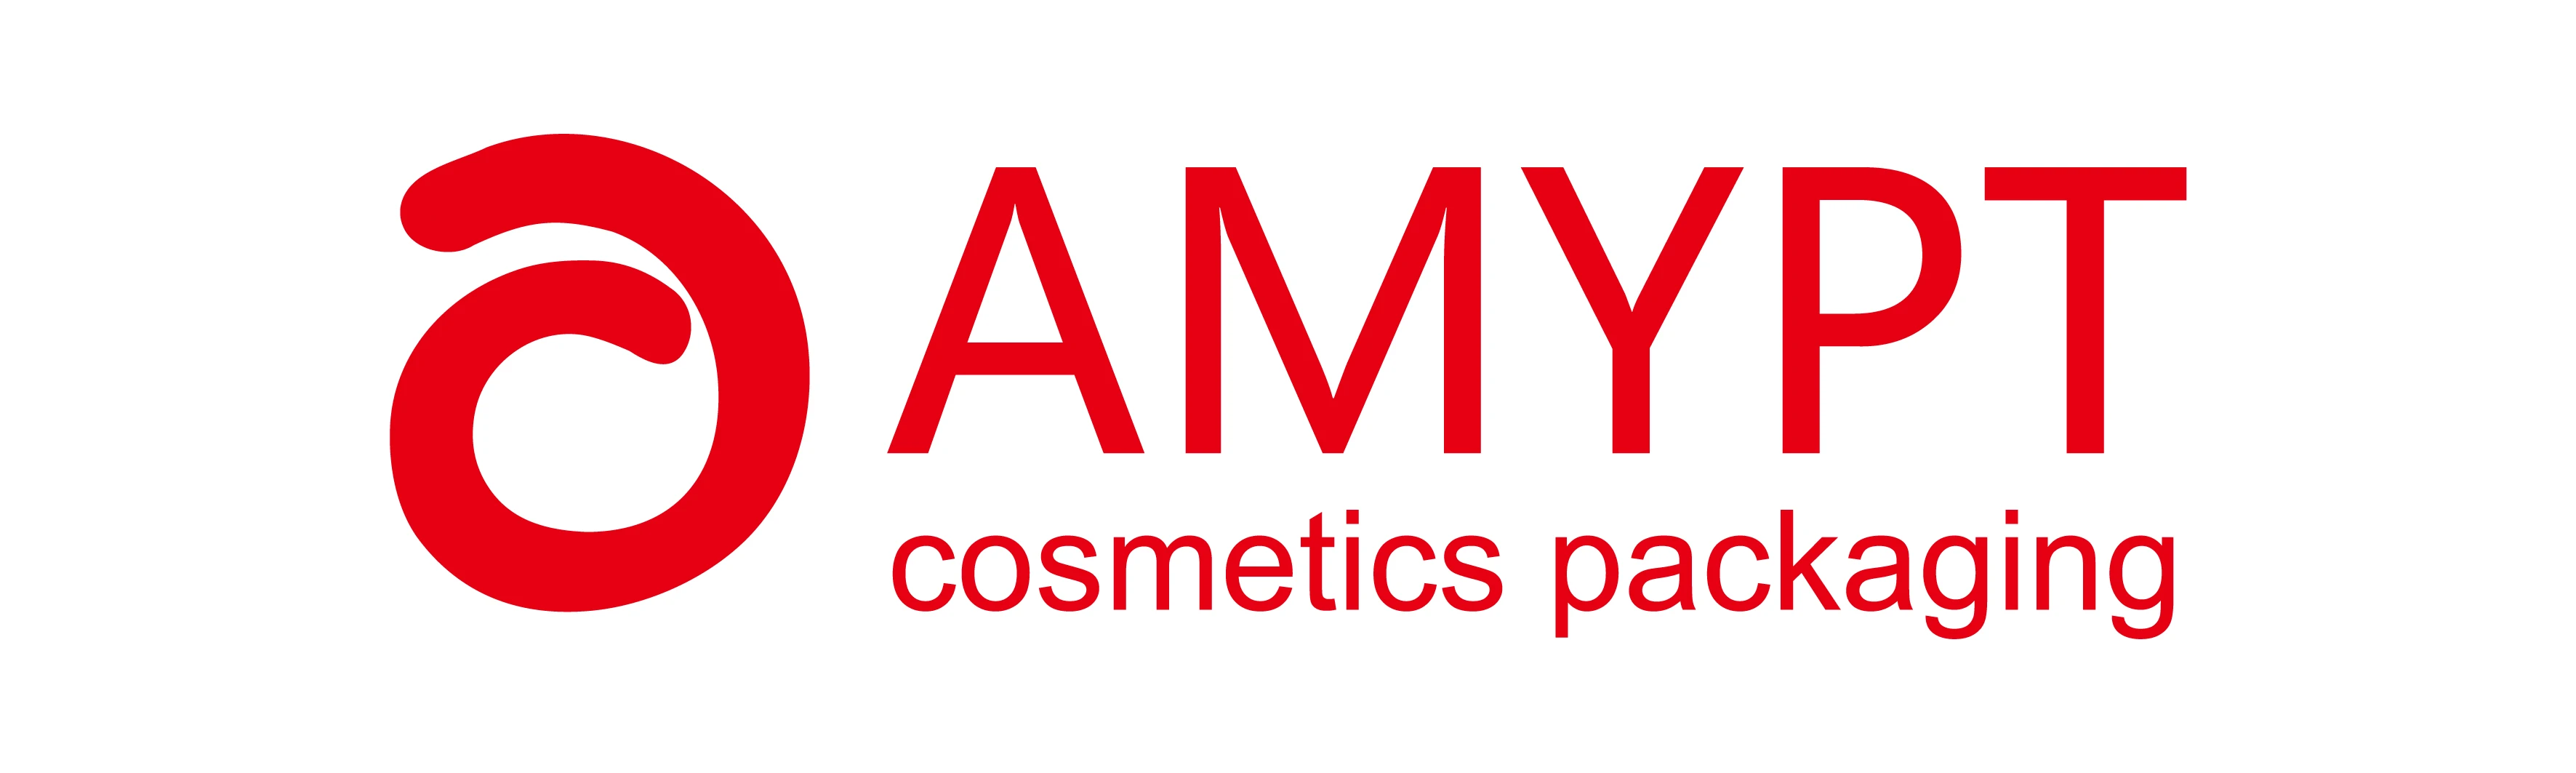 Guangzhou Amy Plastic Tube Co., Ltd. - Plastic Tube, Cosmetic Bottle